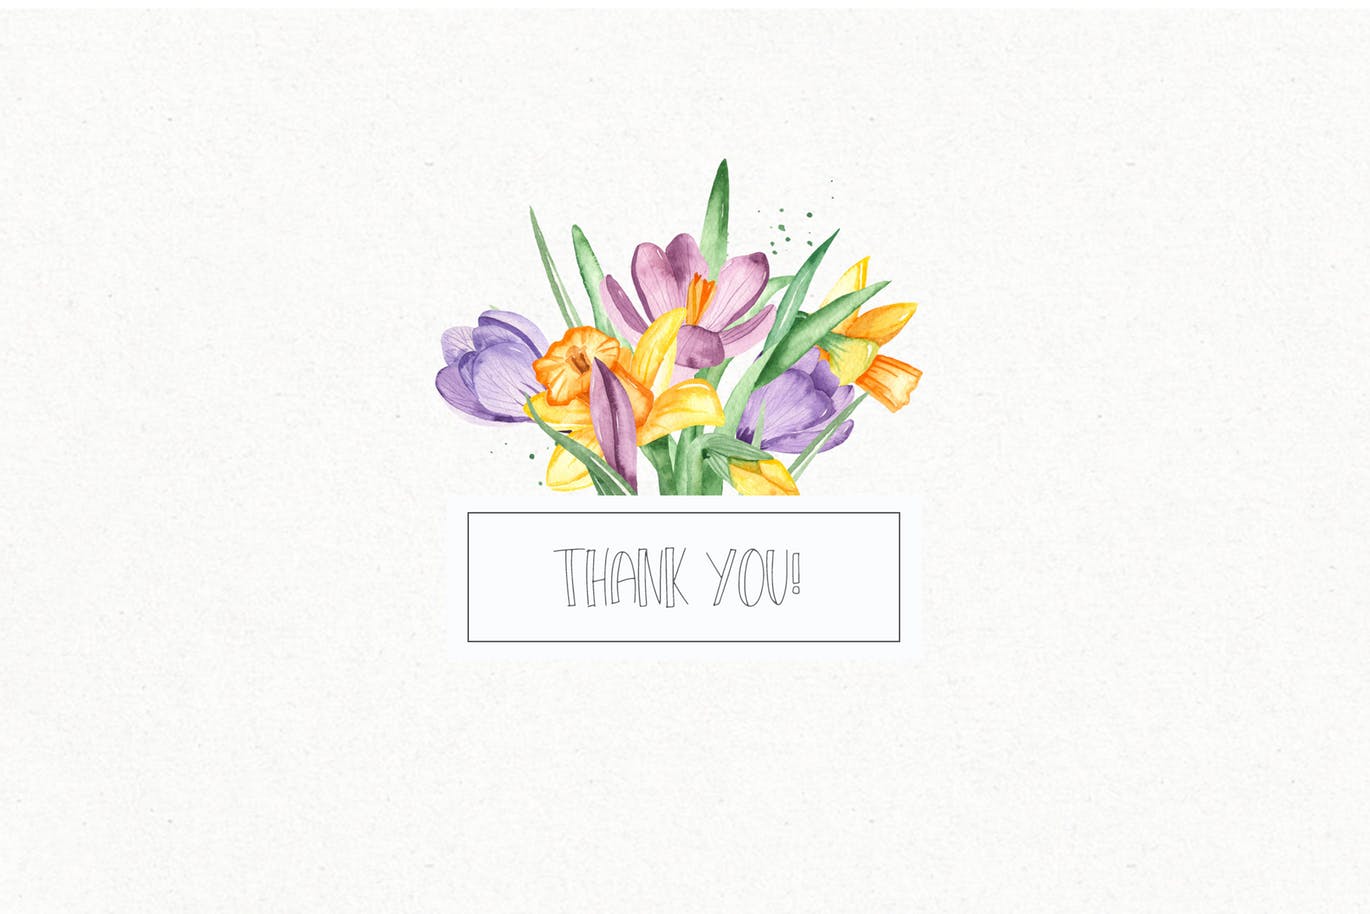 春季花卉水彩素材套装 Watercolor spring flowers collection插图(10)